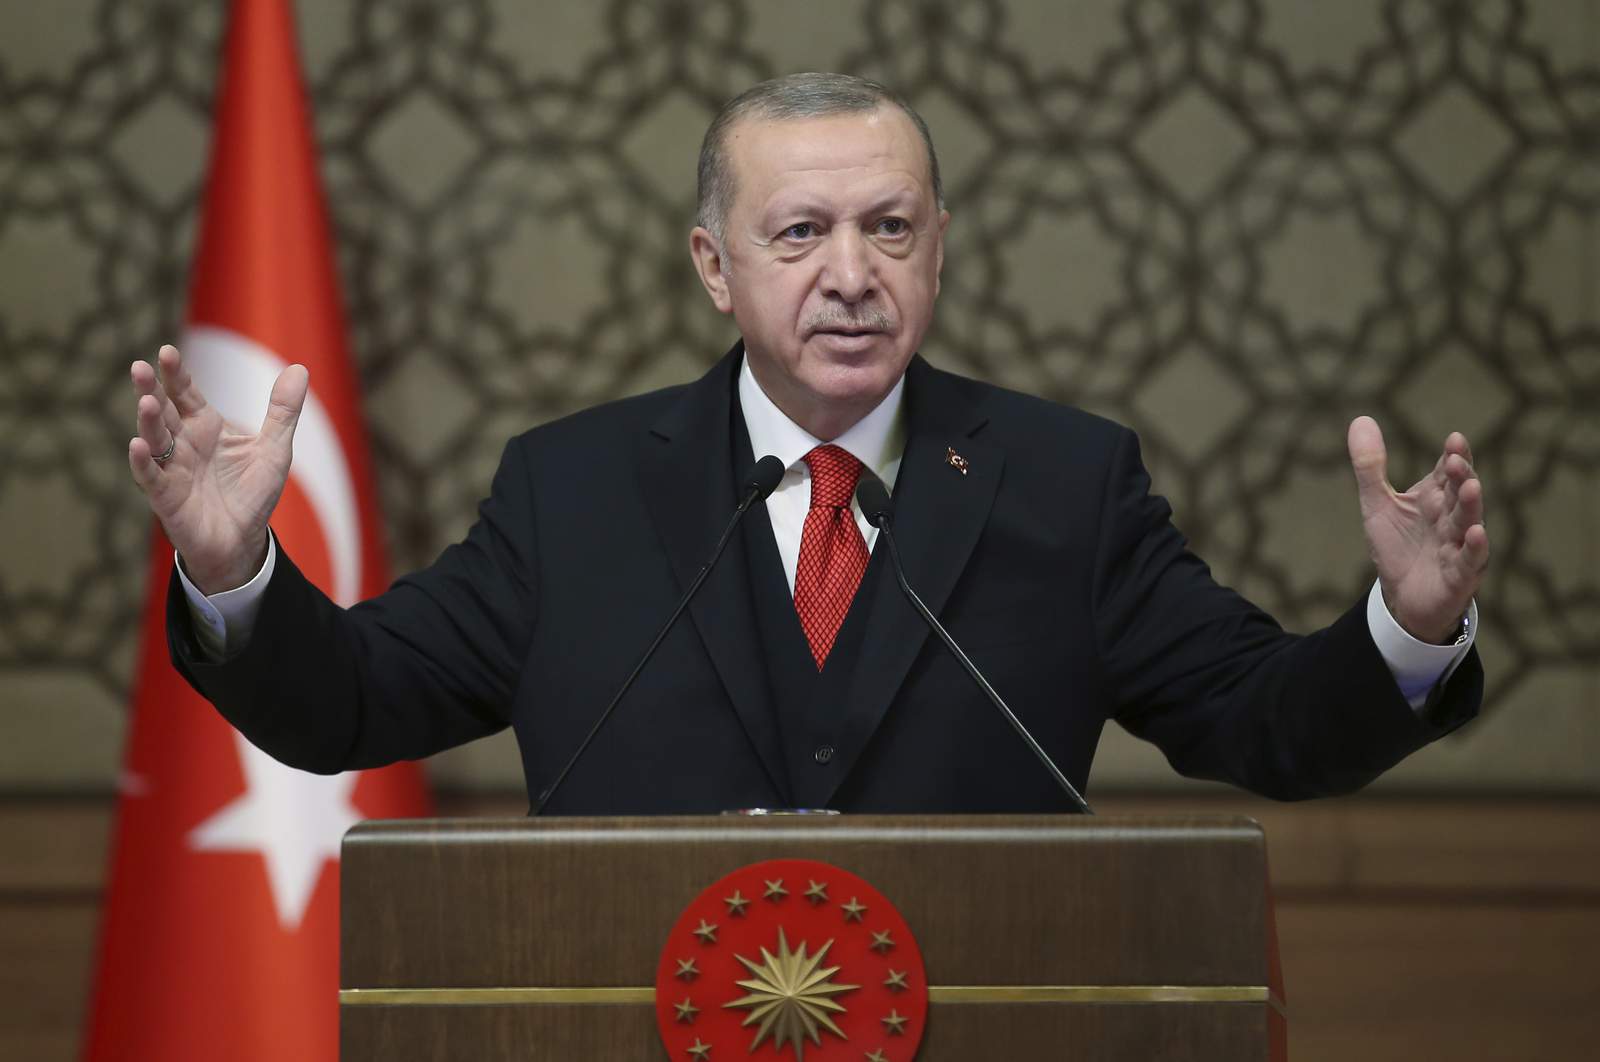 Turkey's President Erdogan congratulates Biden on his win